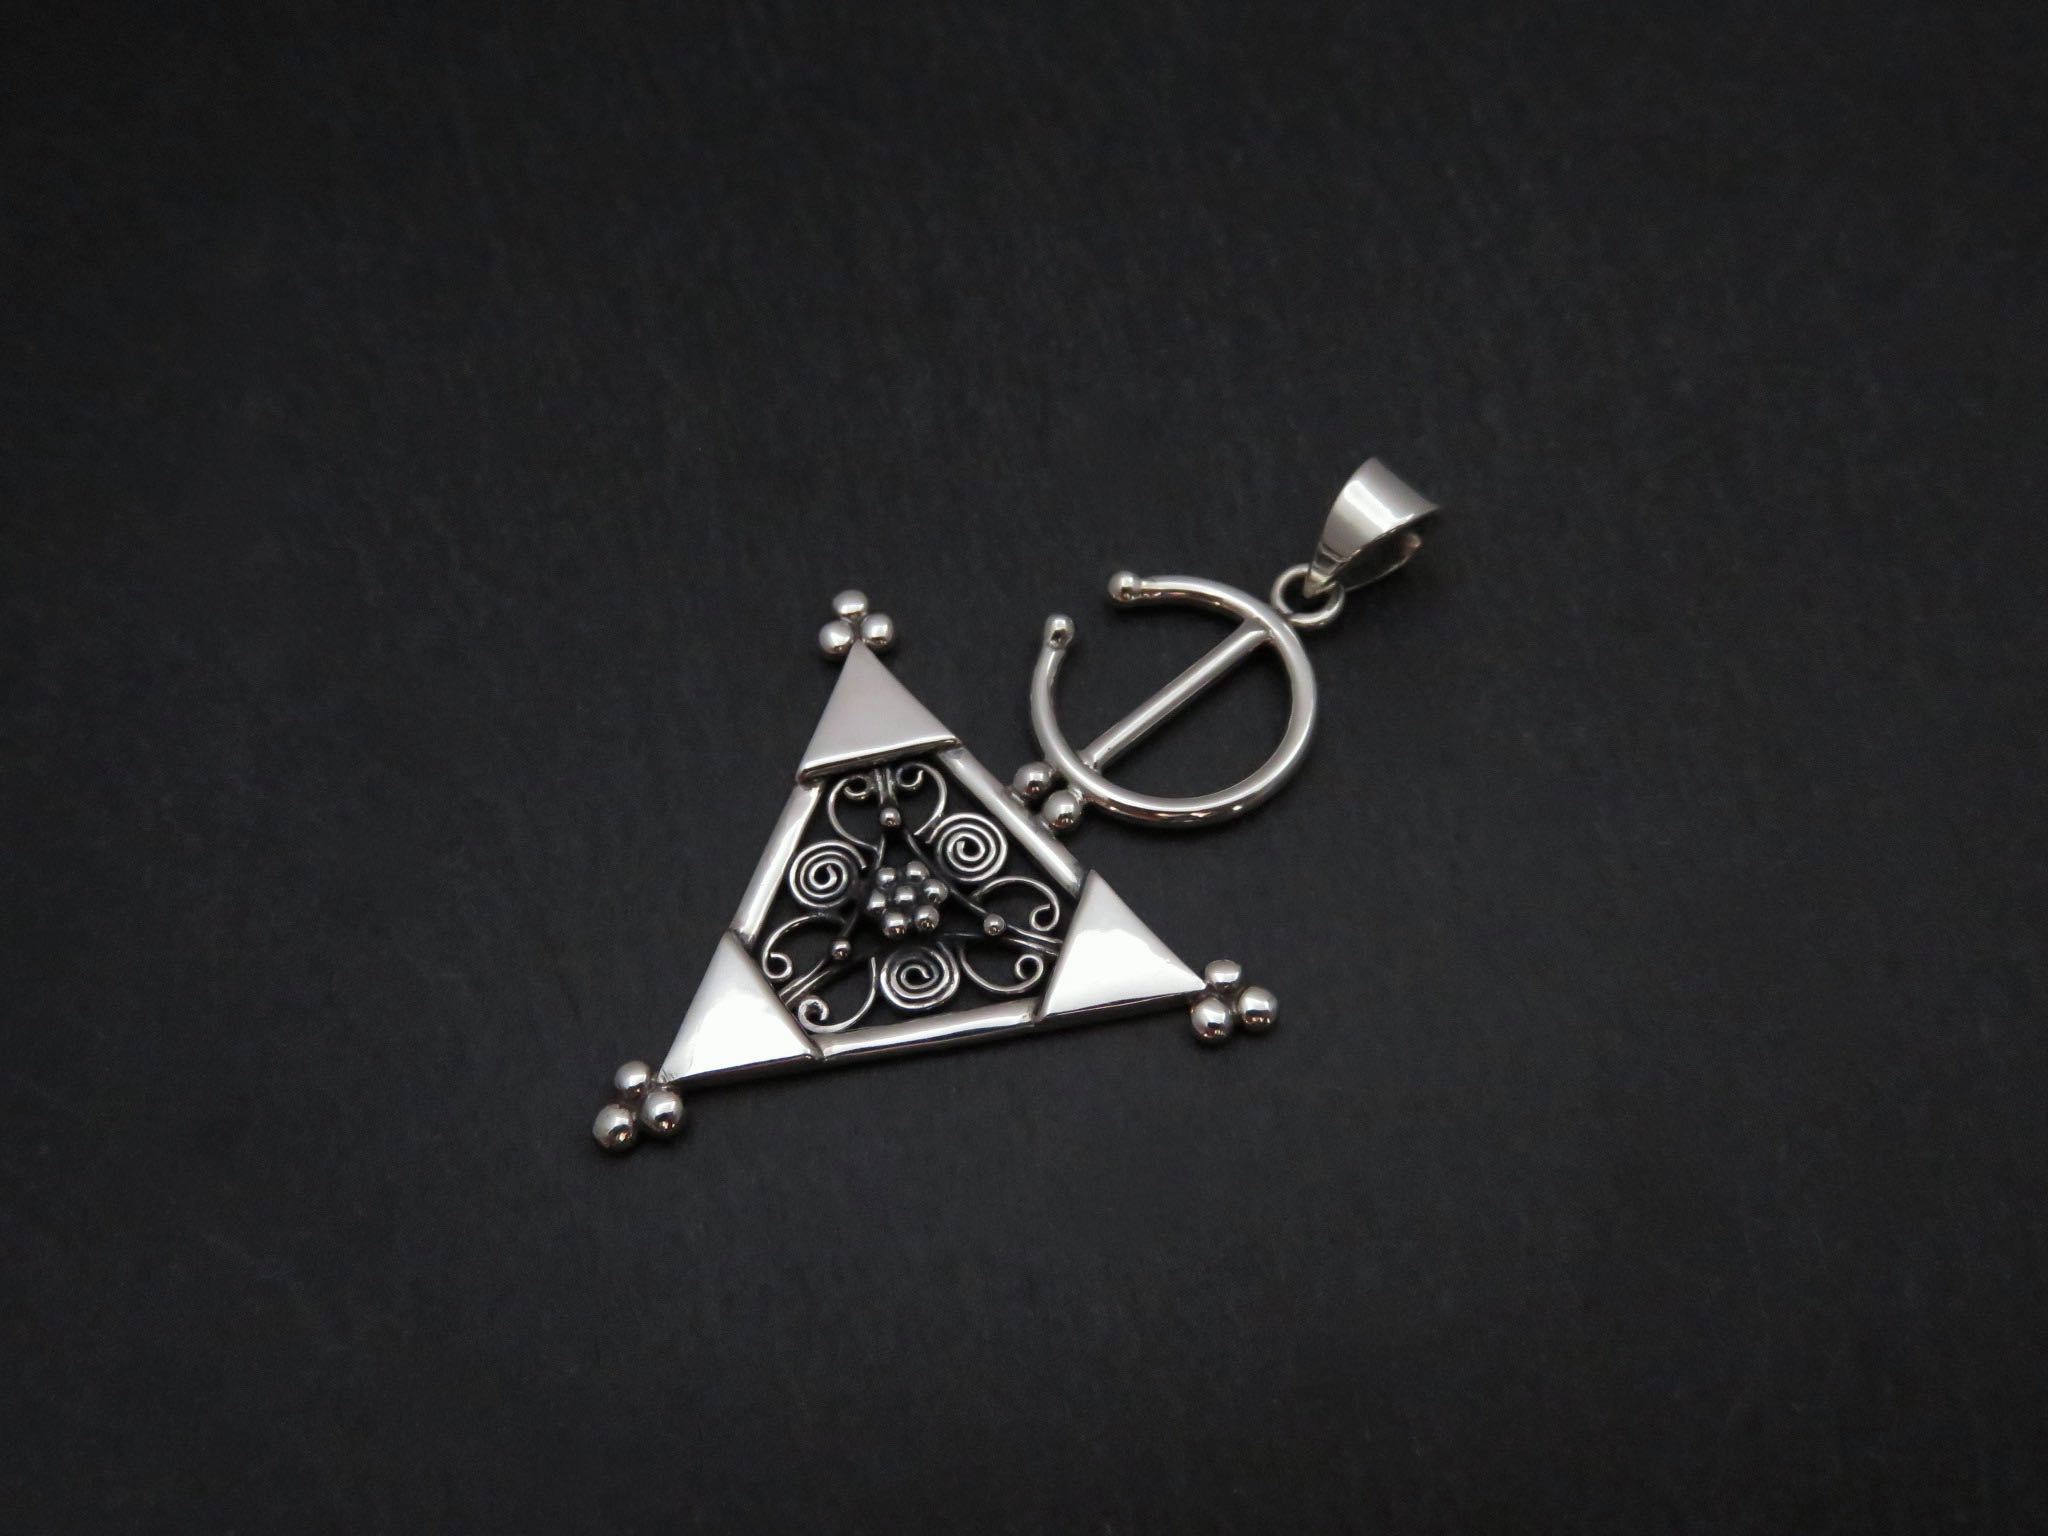 Anhänger mit filigran verziertem Dreieck aus Silber